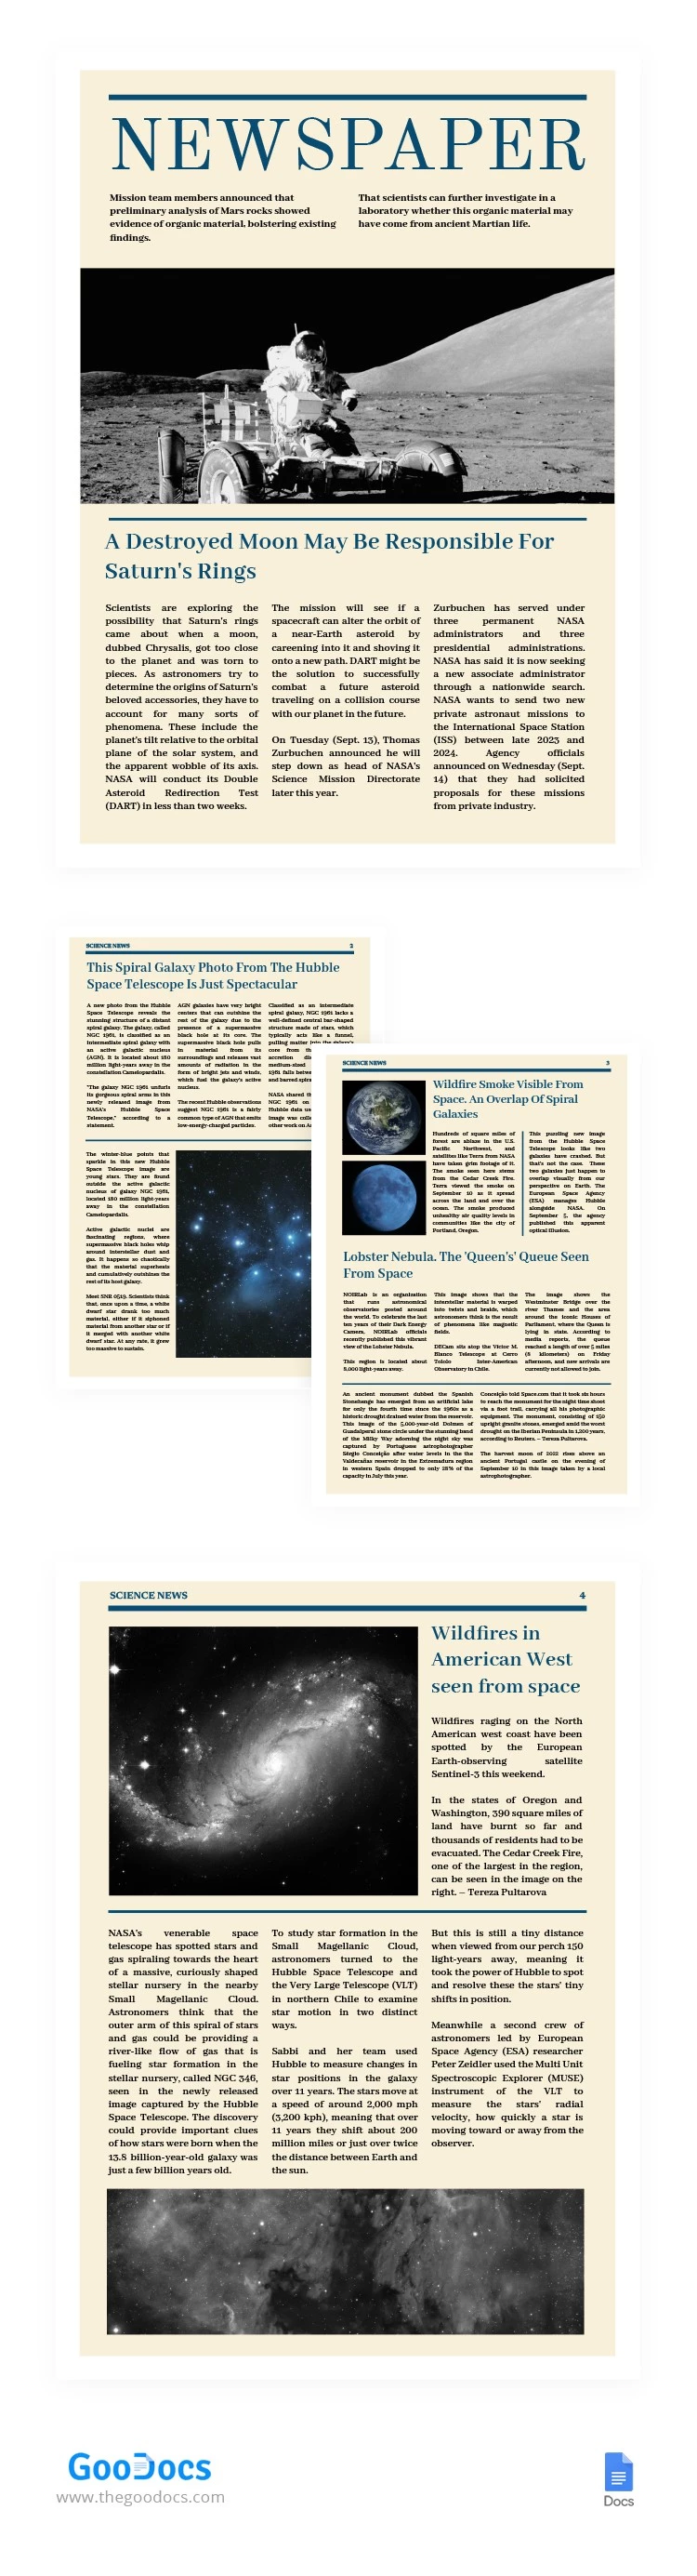 Beige-Blue Science Newspaper - free Google Docs Template - 10064594